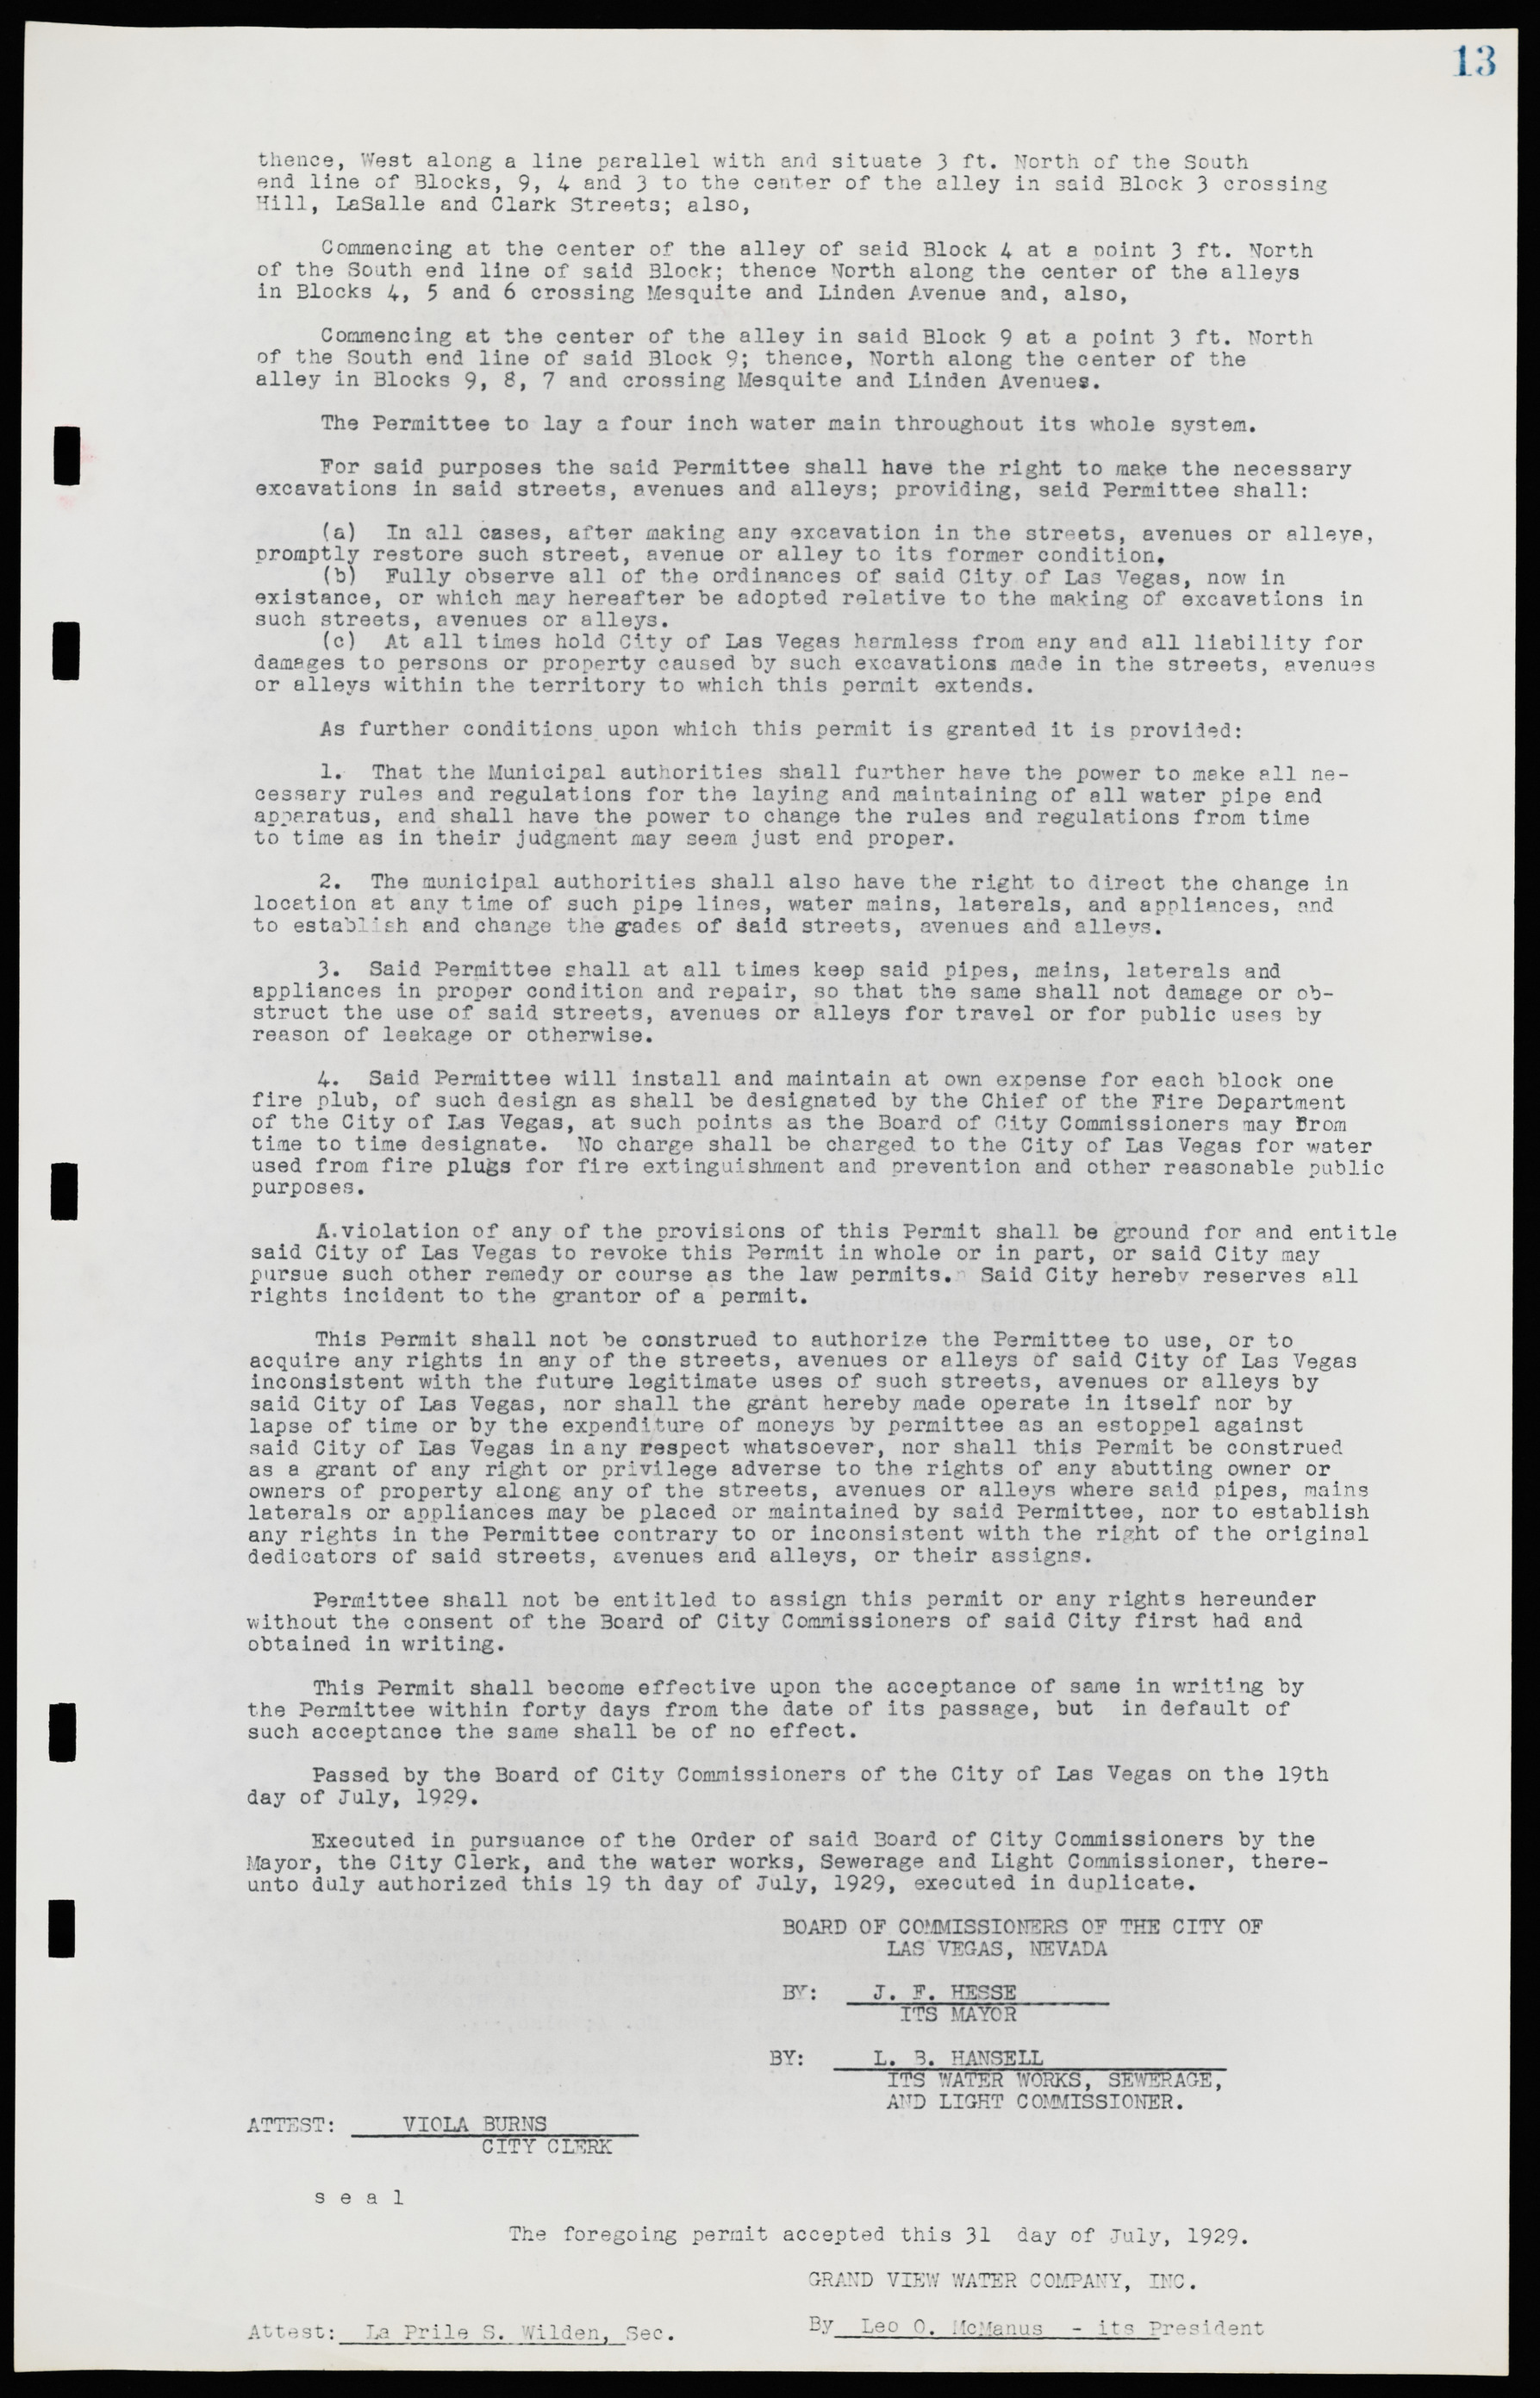 Las Vegas City Commission Legal Documents, February 29, 1944 to February 21, 1945, lvc000016-21